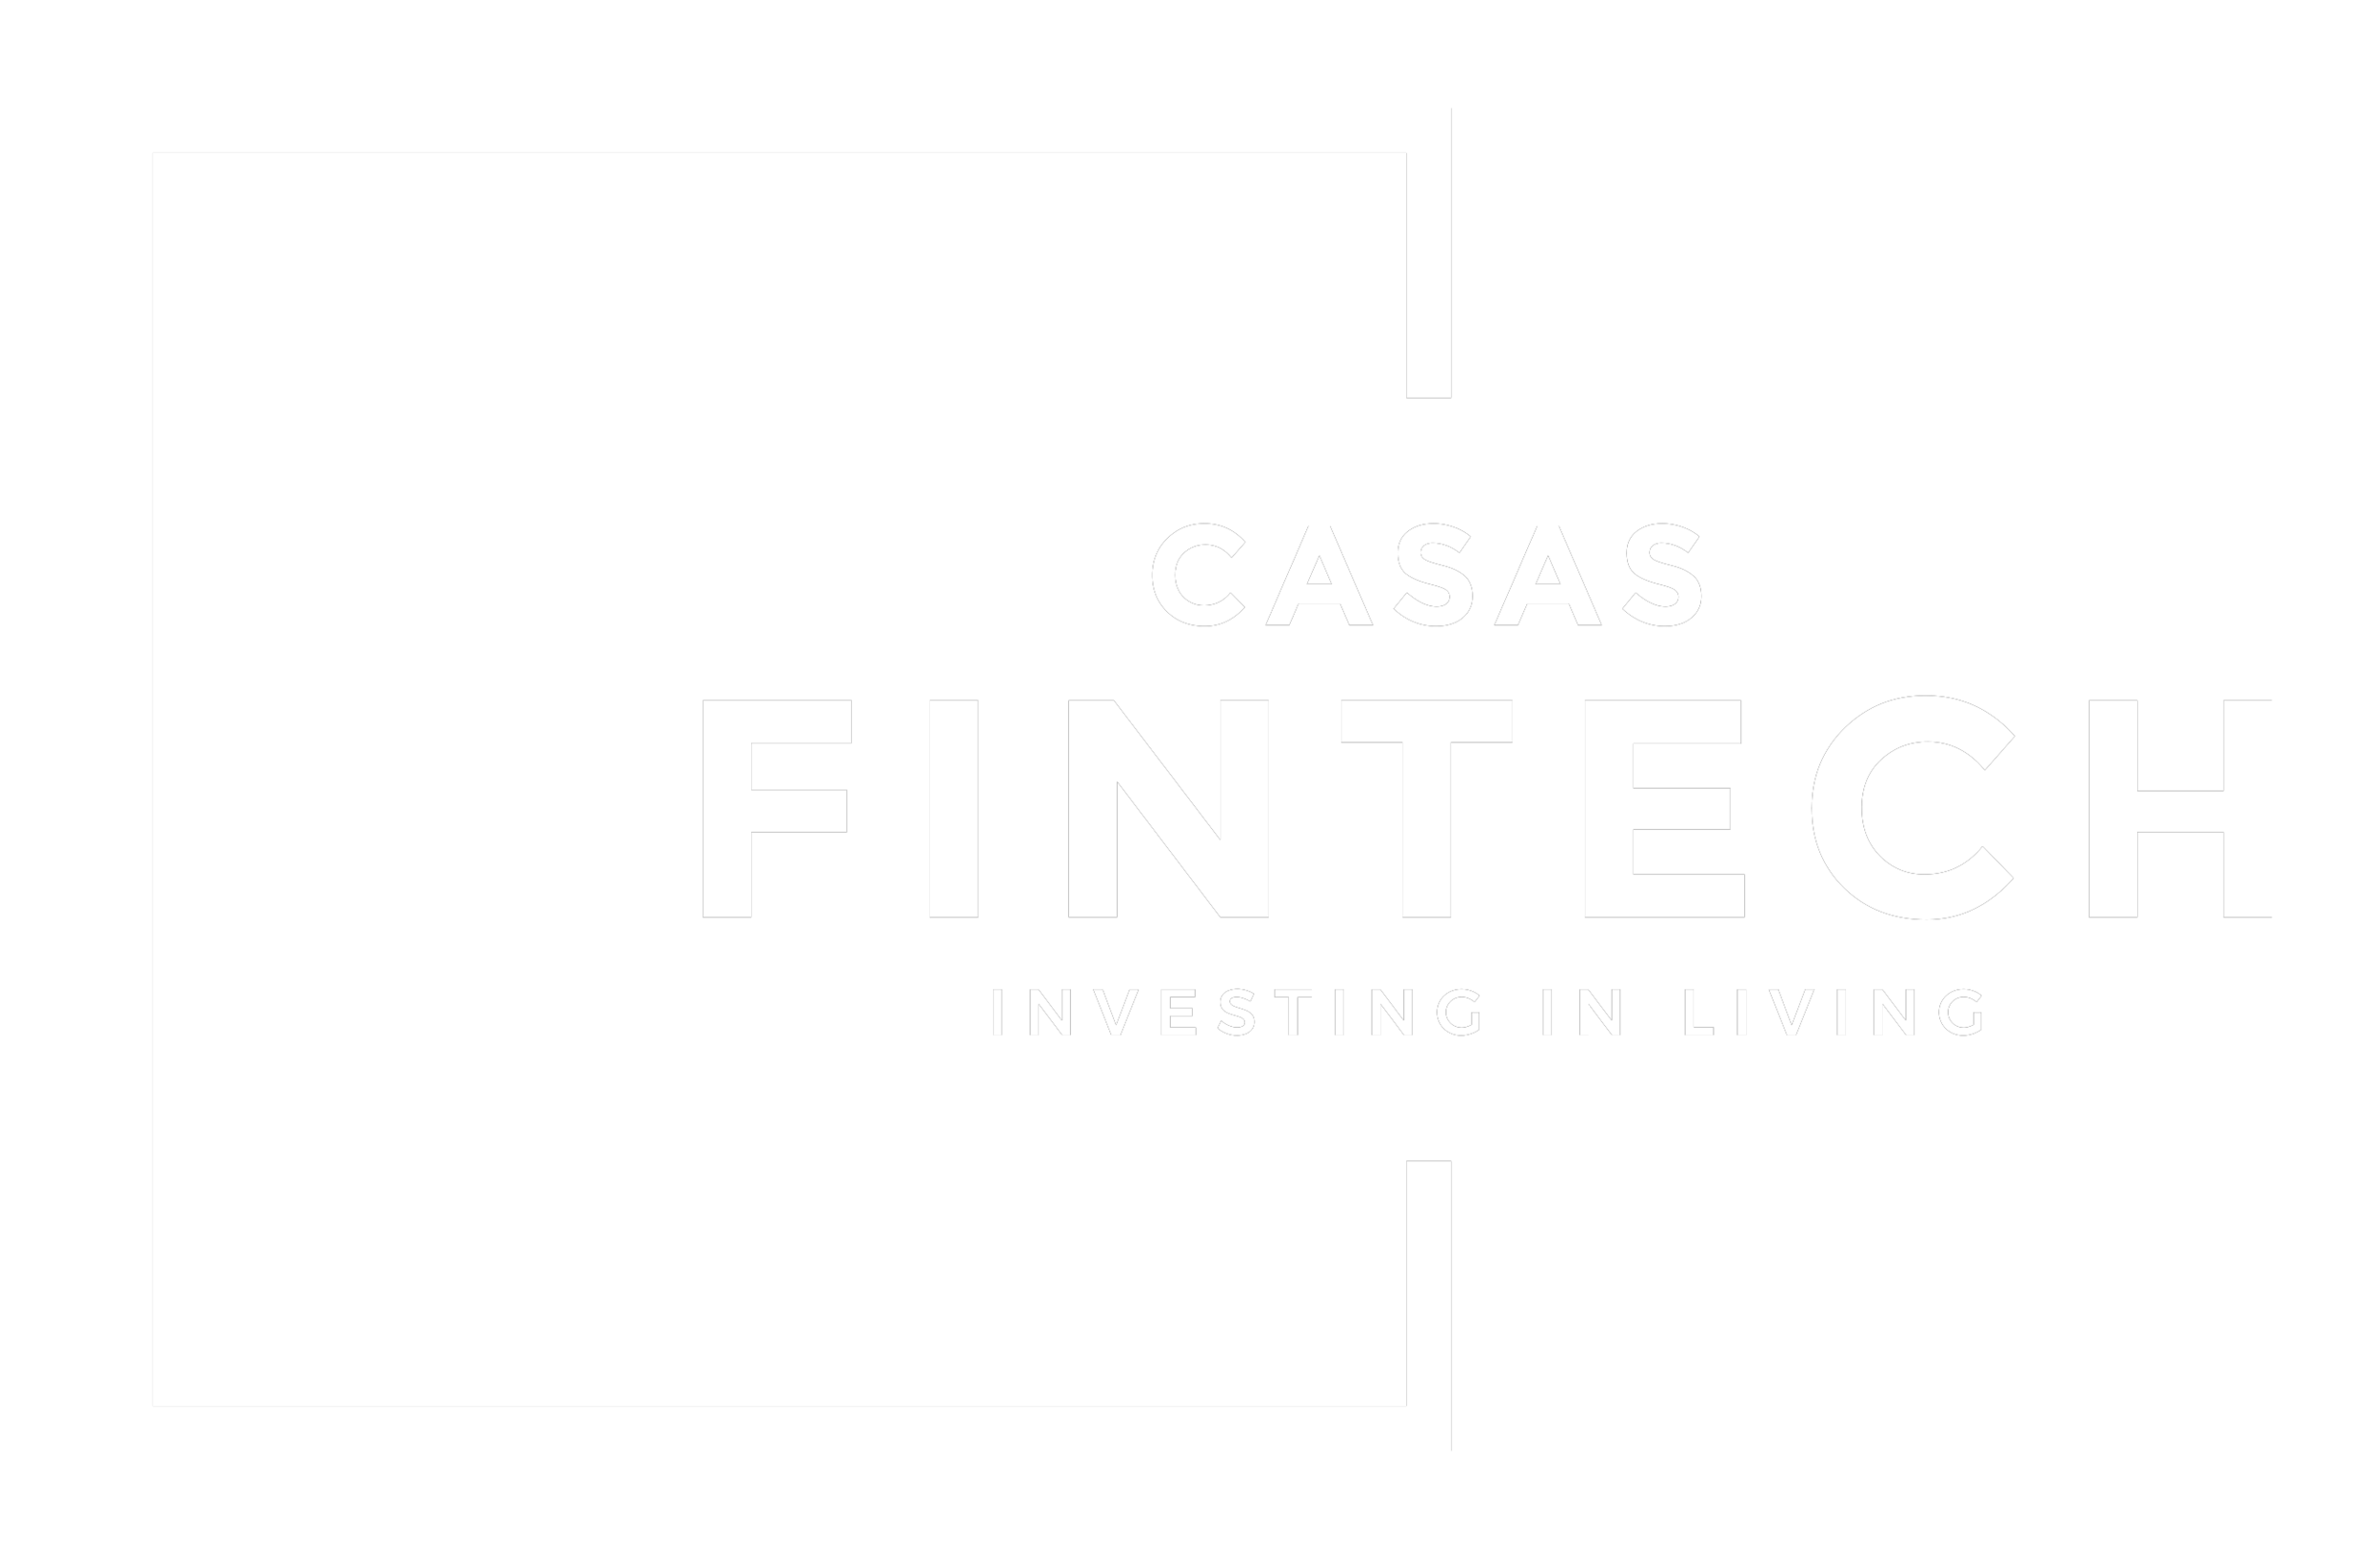 Casas Fintech - Investing in Living